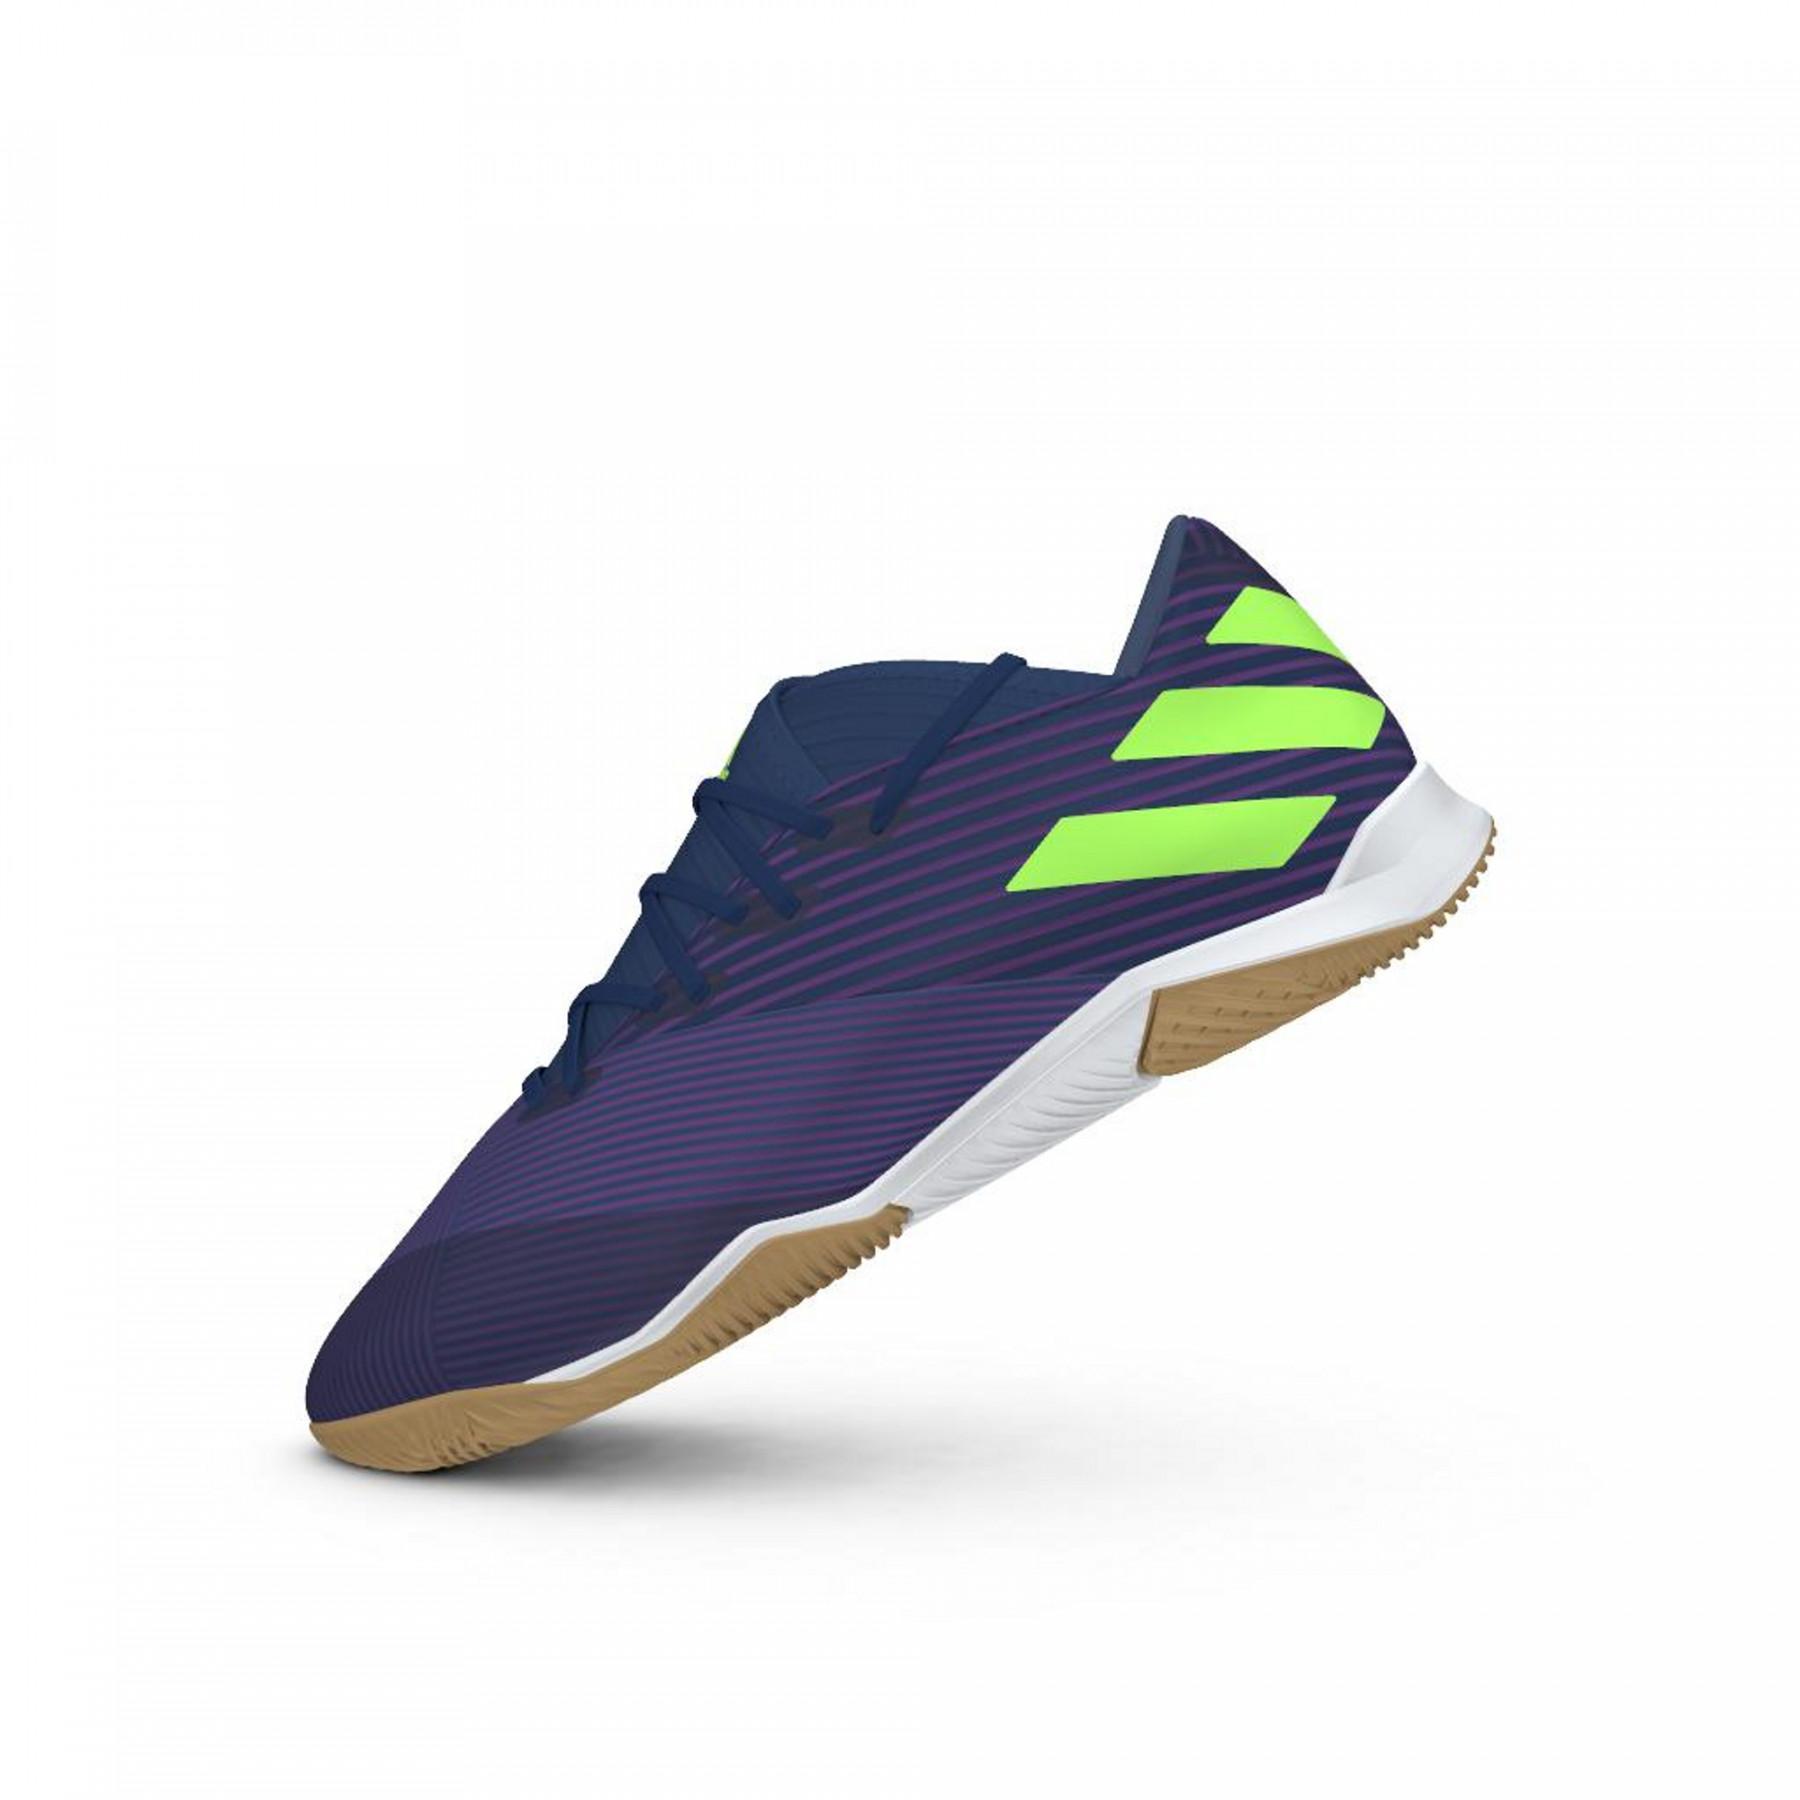 Chaussures de football adidas Nemeziz Messi 19.3 IN